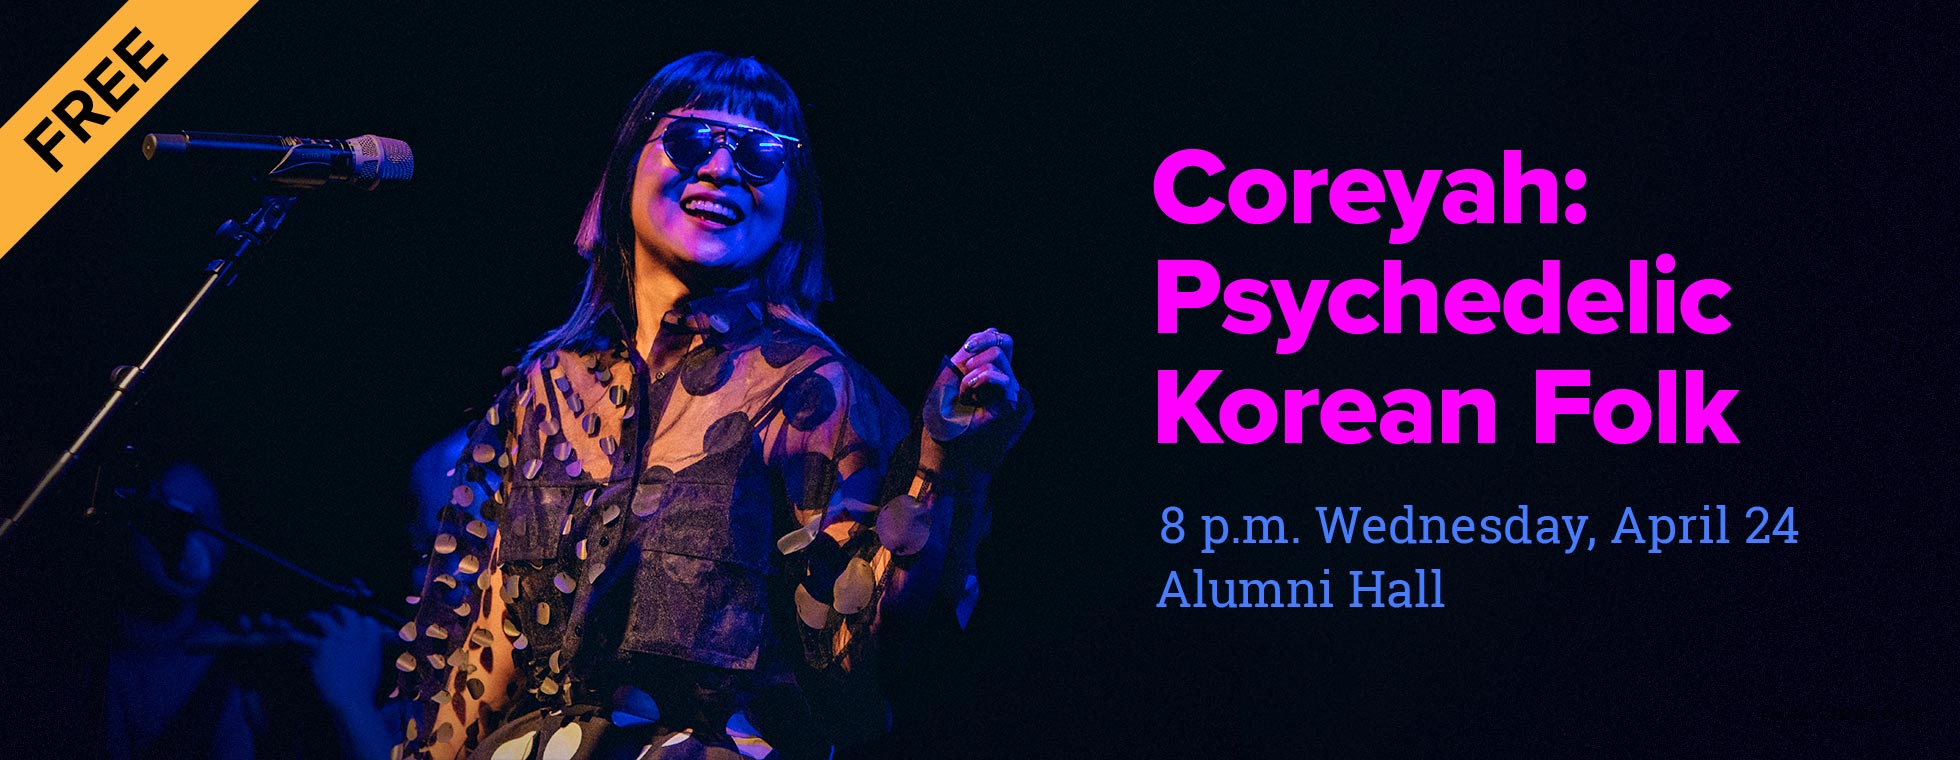 Free. Coreyah: Psychedelic Korean Folk. 8 p.m. Wednesday, April 24 at Alumni Hall.